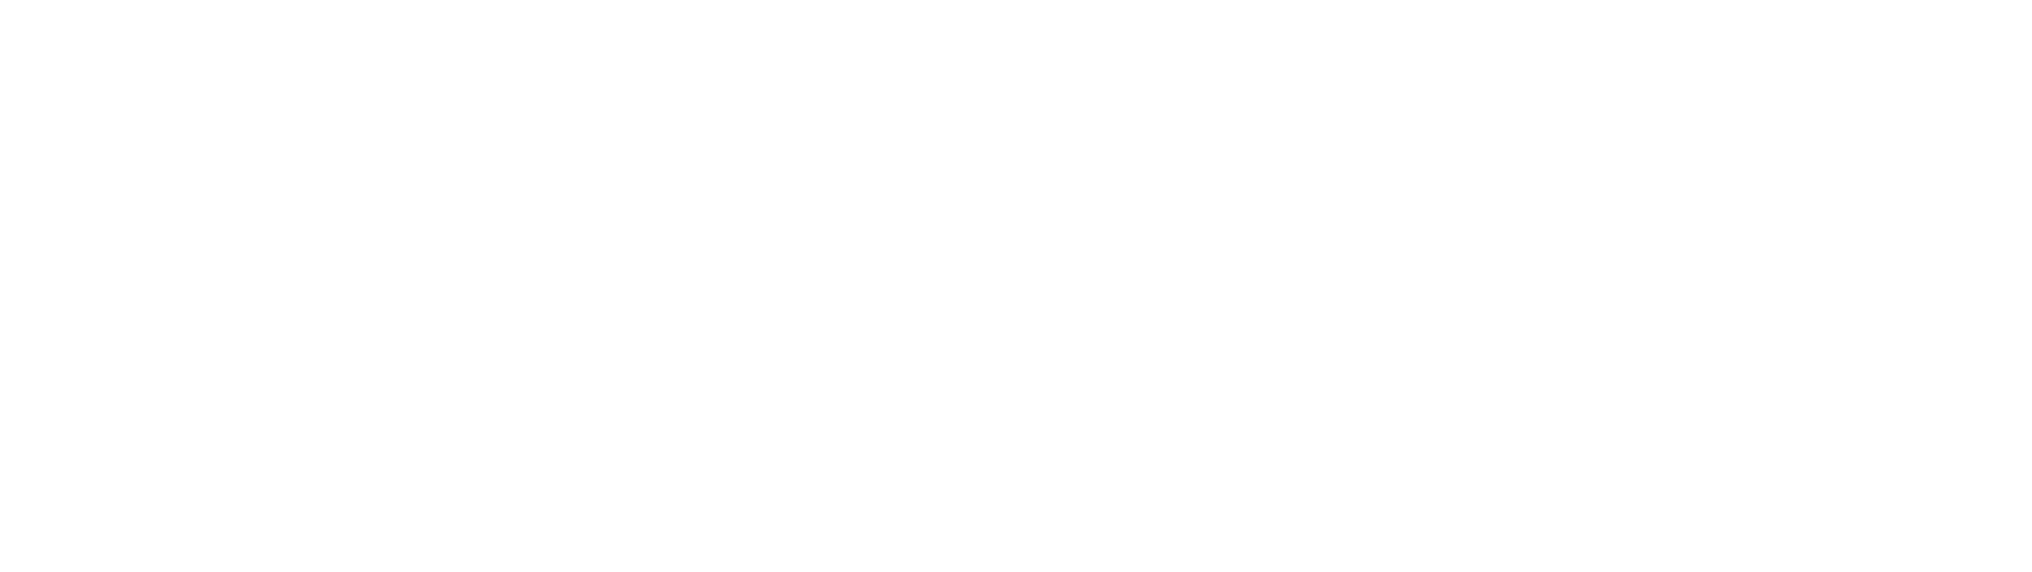 Toor Computerized Lab logo